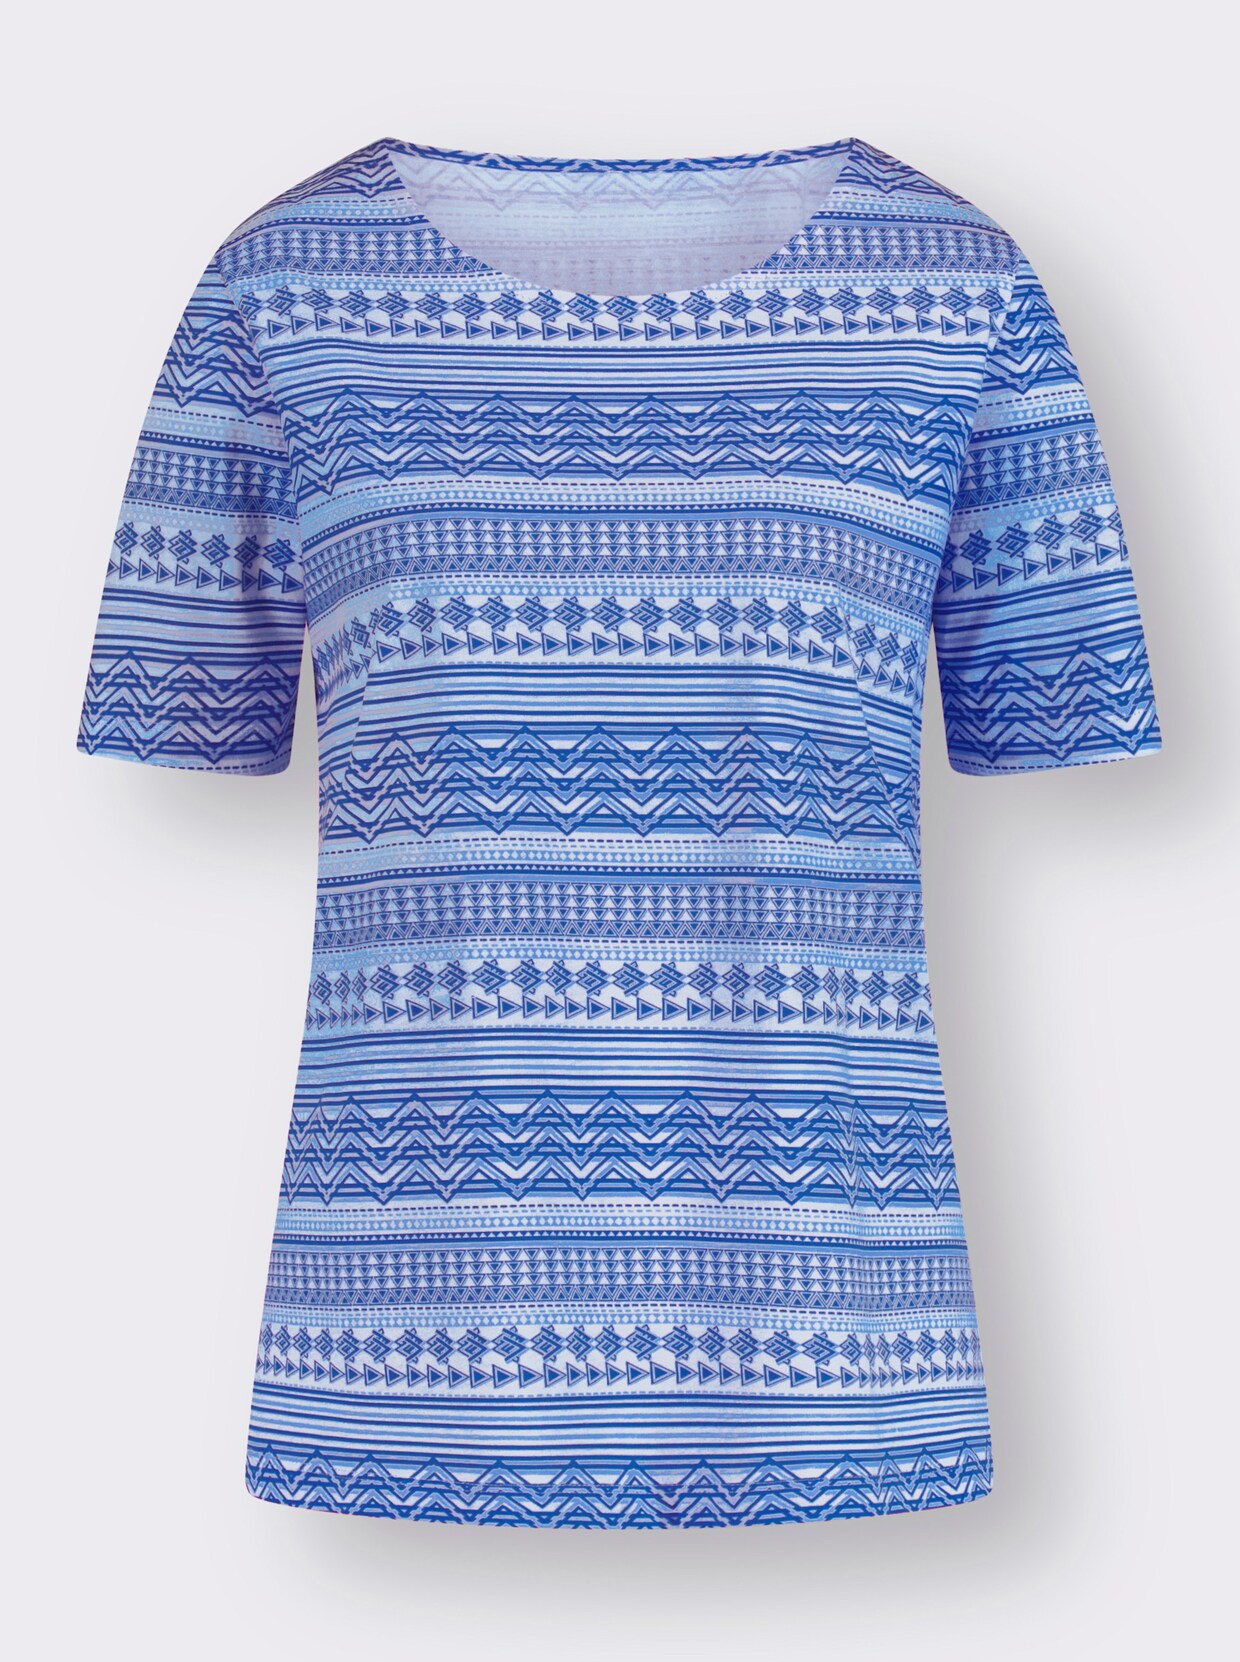 Tričko s krátkým rukávem - královská modrá-vzor